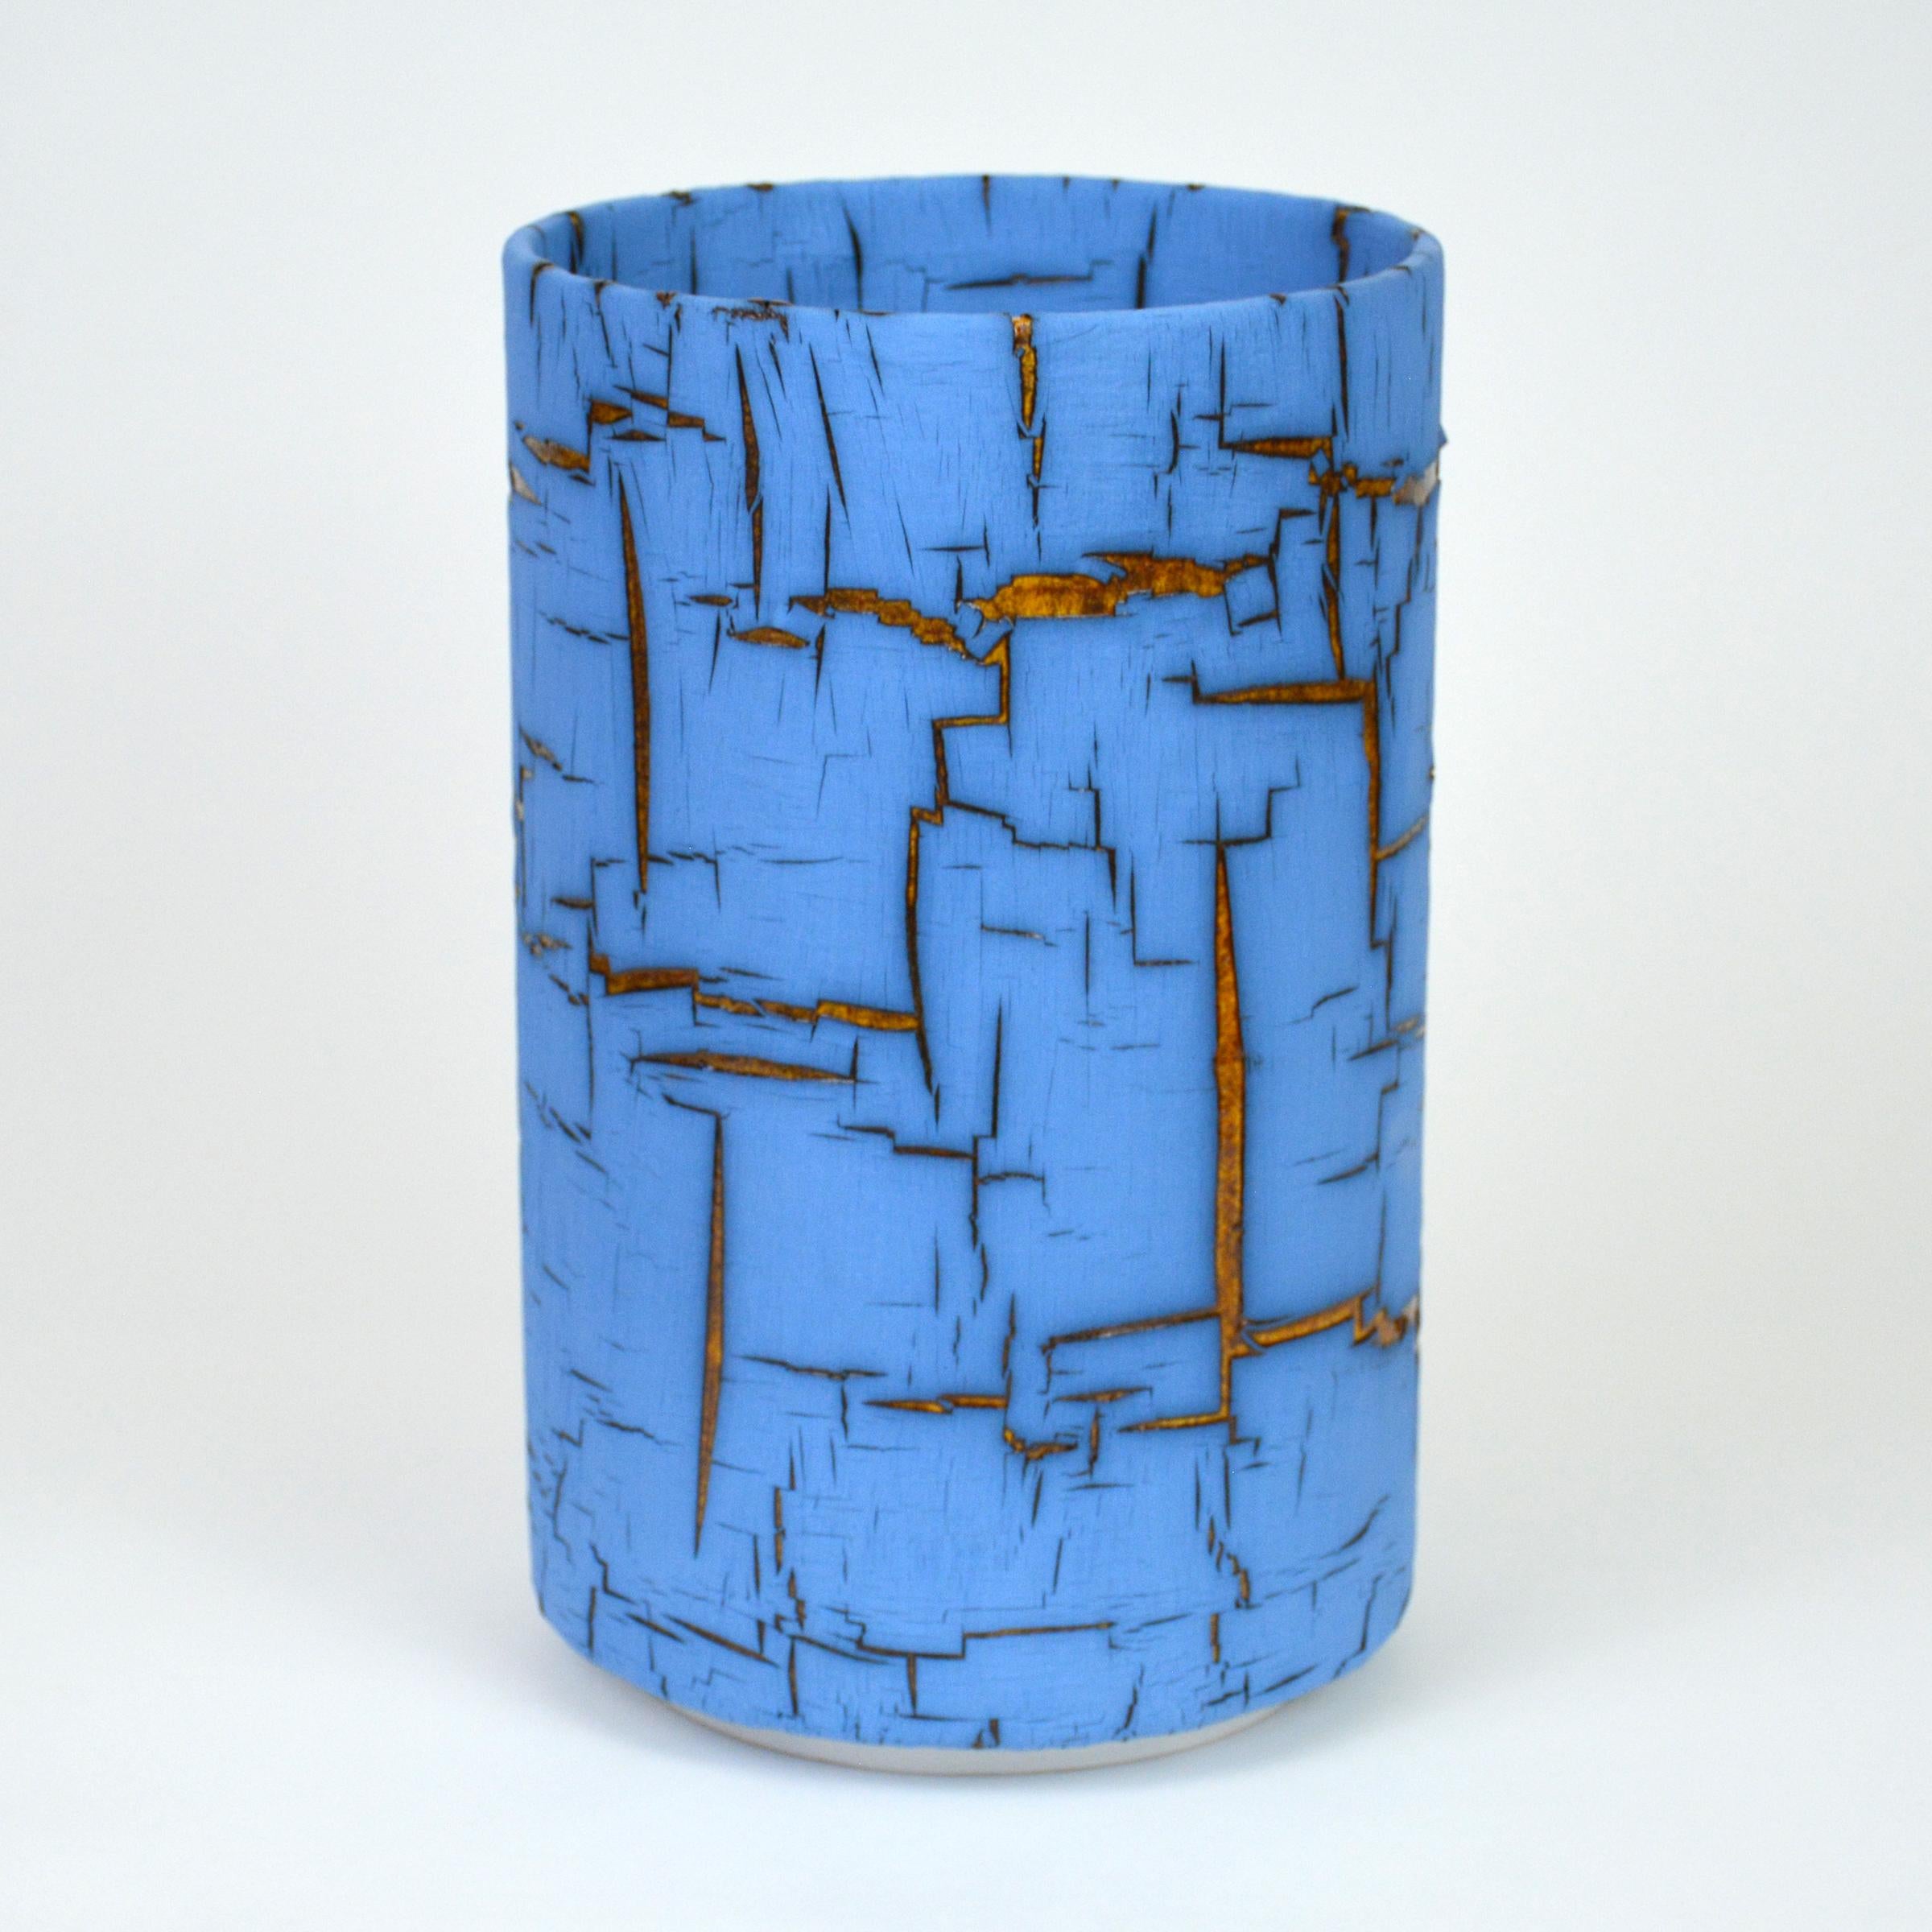 American Ceramic Vessel  Cylinder Sculpture  by William Edwards  For Sale